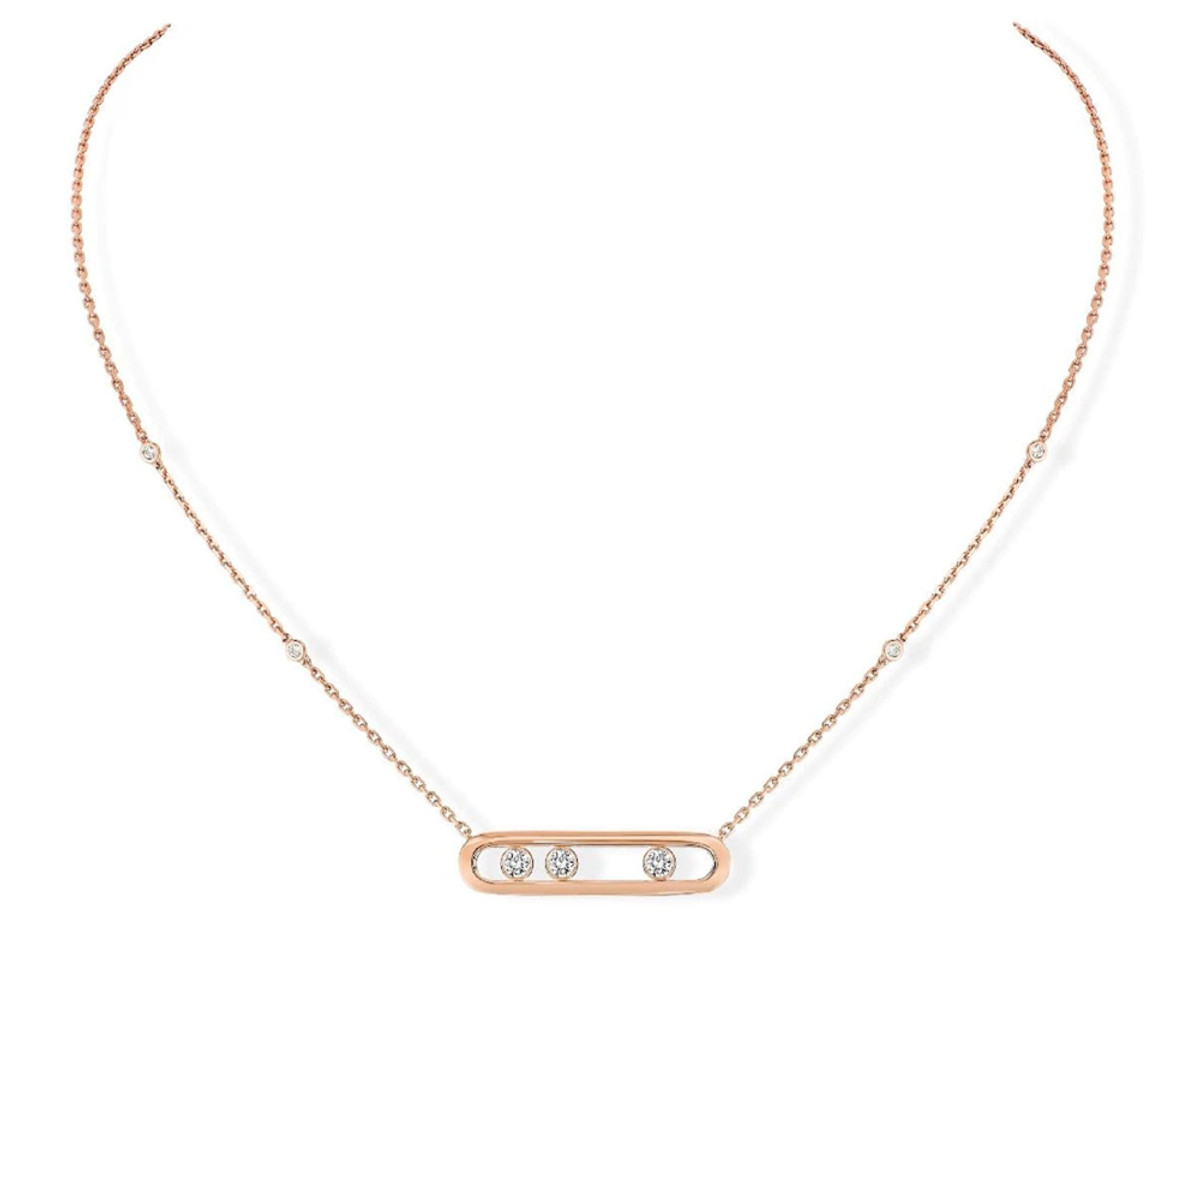 Messika Move Diamond Necklace-37021 Product Image